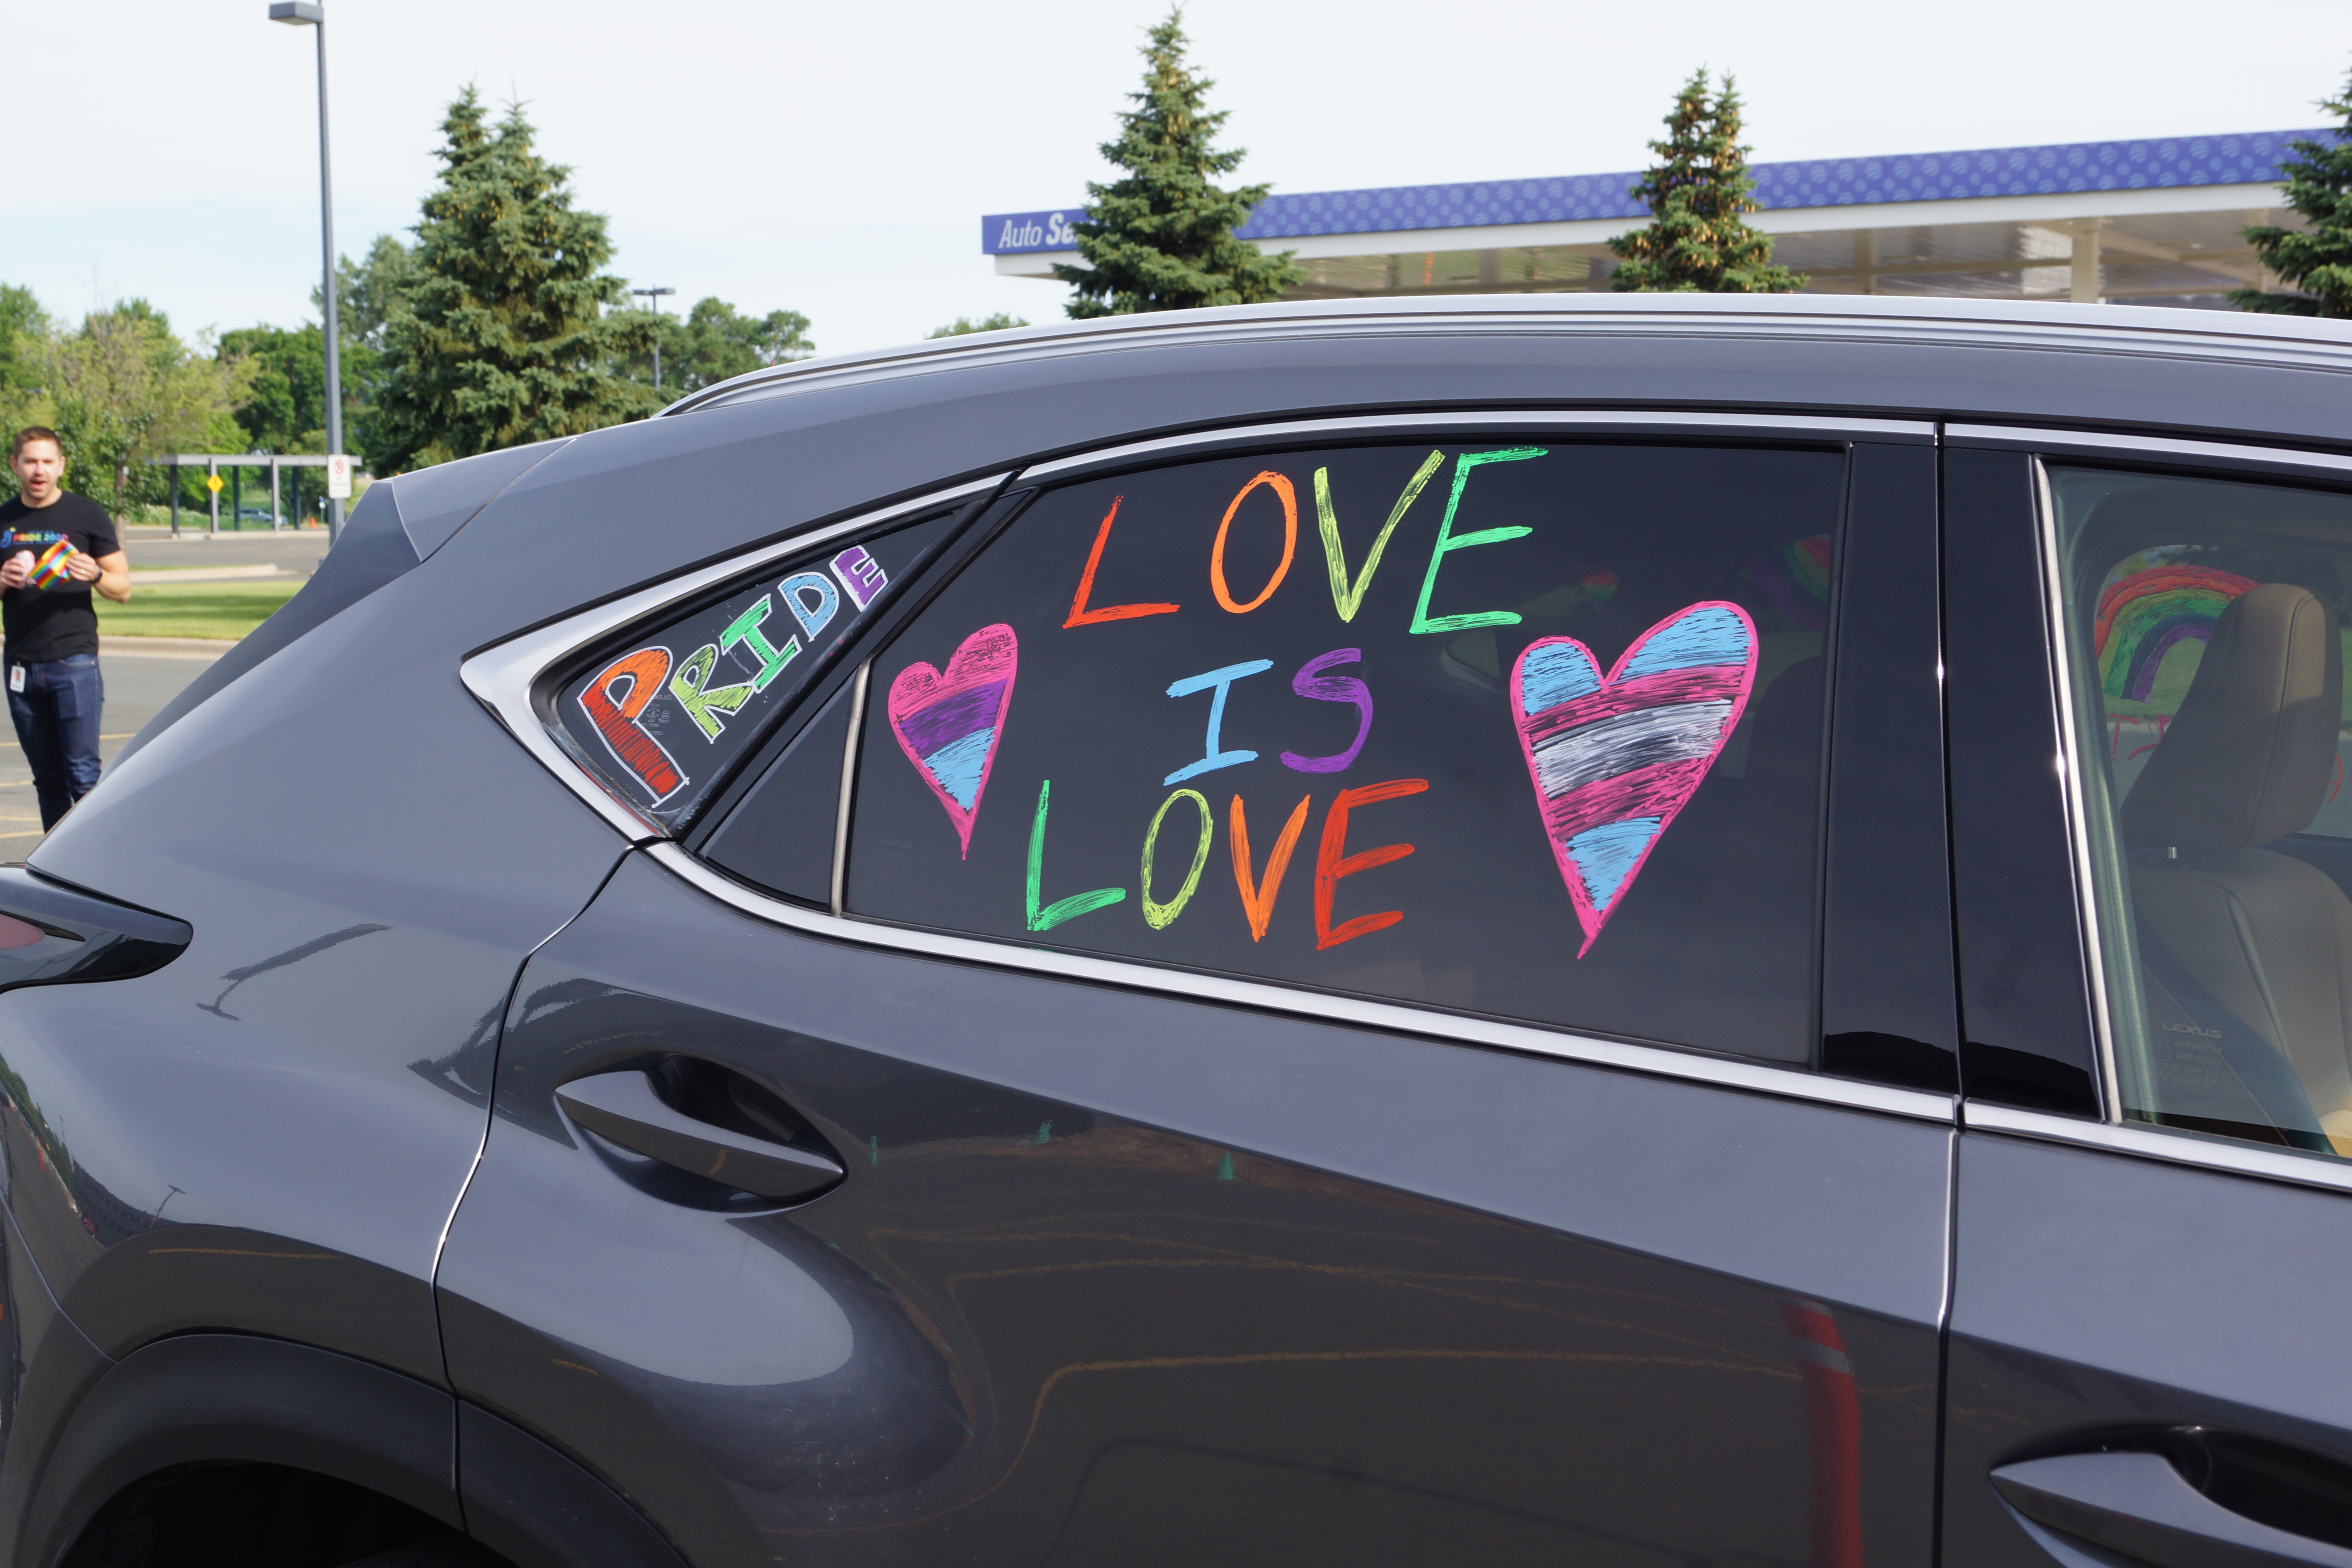 Love is love painted on car window